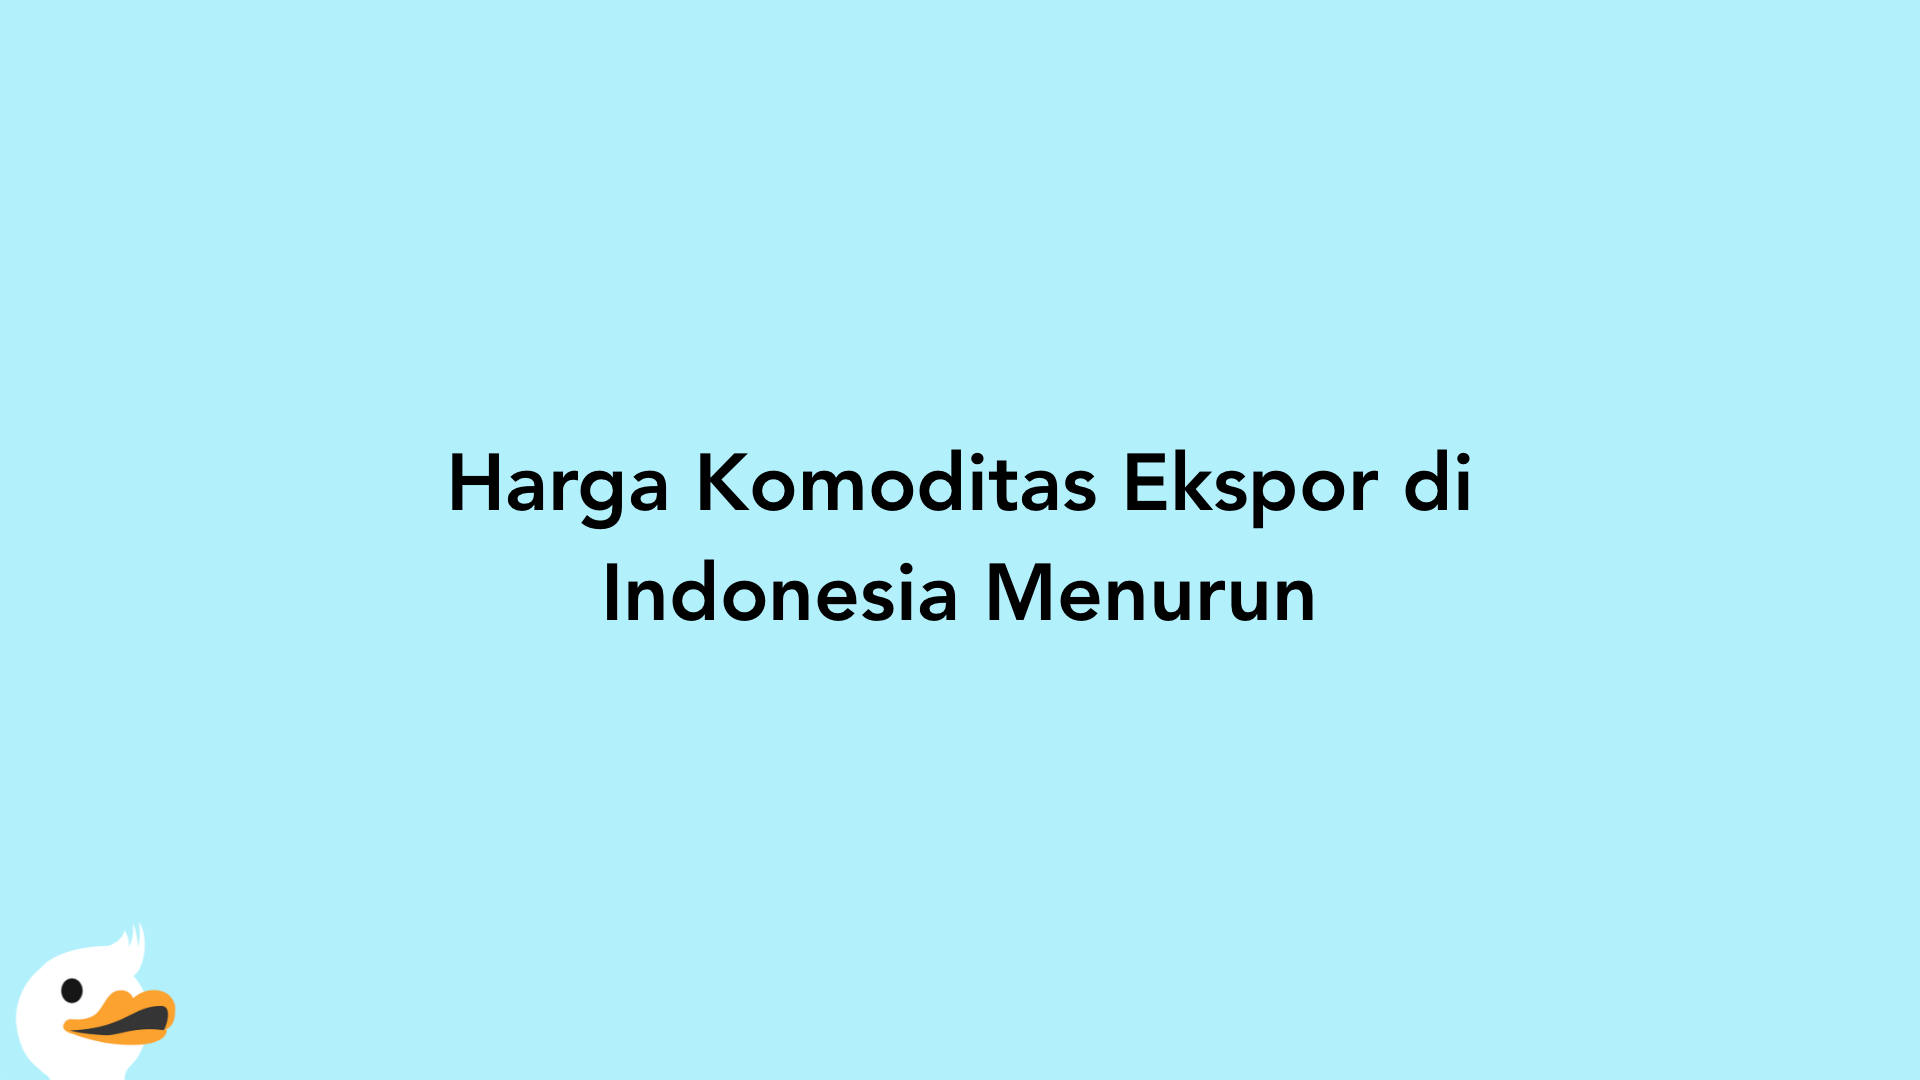 Harga Komoditas Ekspor di Indonesia Menurun